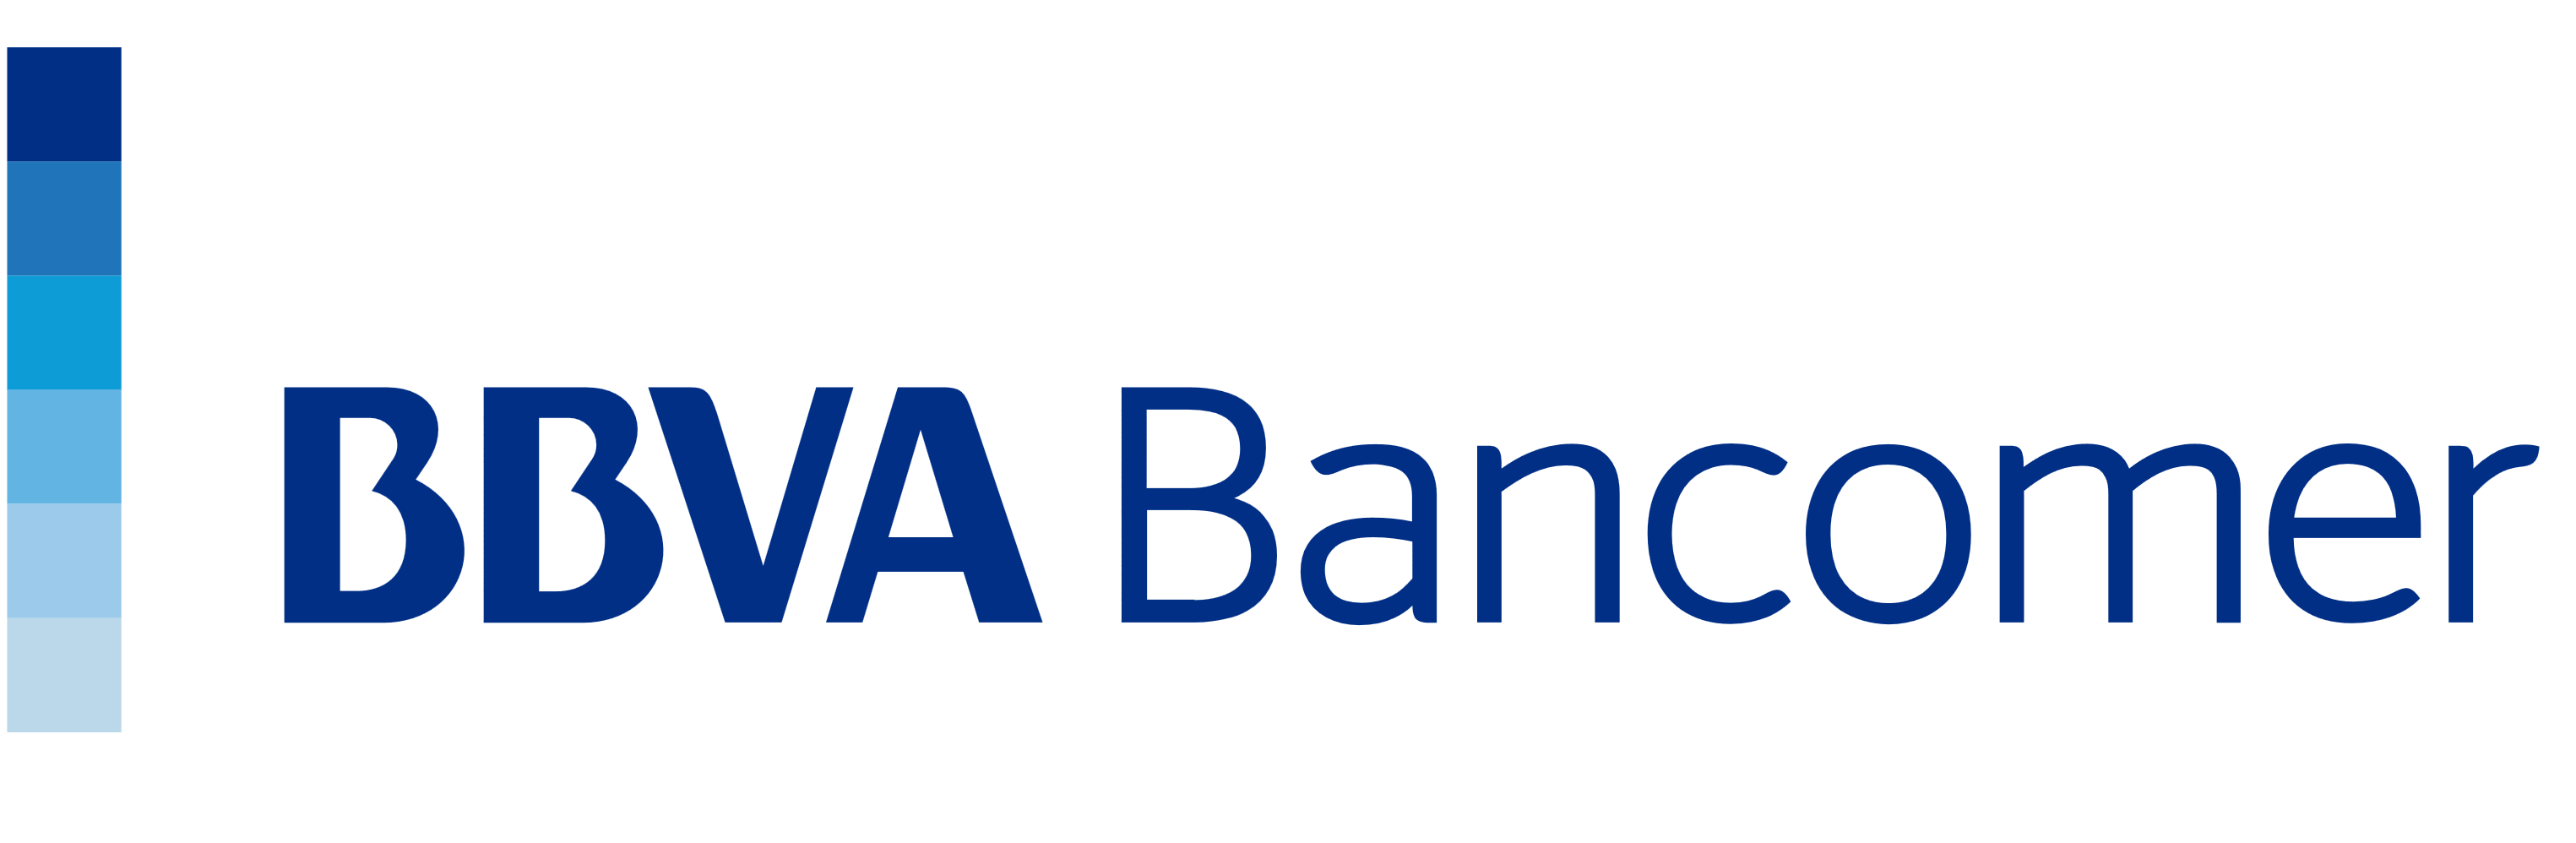 BBVA Bancomer logo, logotype